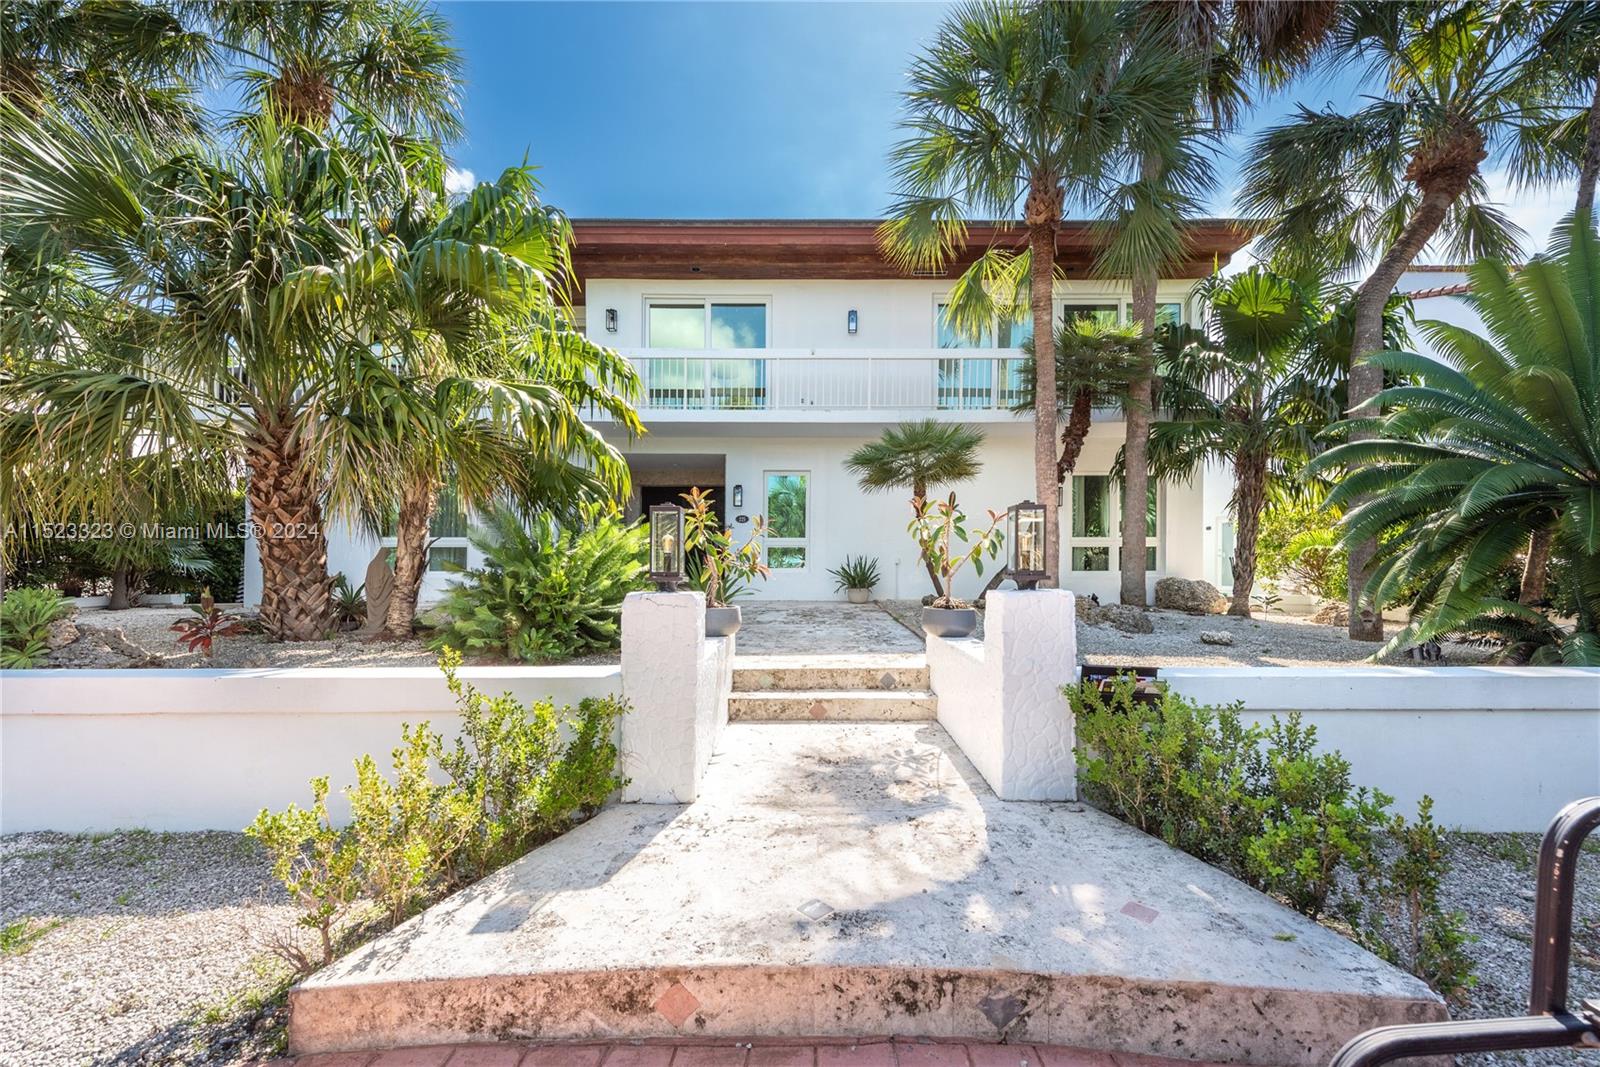 Rental Property at 225 Harbor Dr, Key Biscayne, Miami-Dade County, Florida - Bedrooms: 5 
Bathrooms: 4  - $20,000 MO.